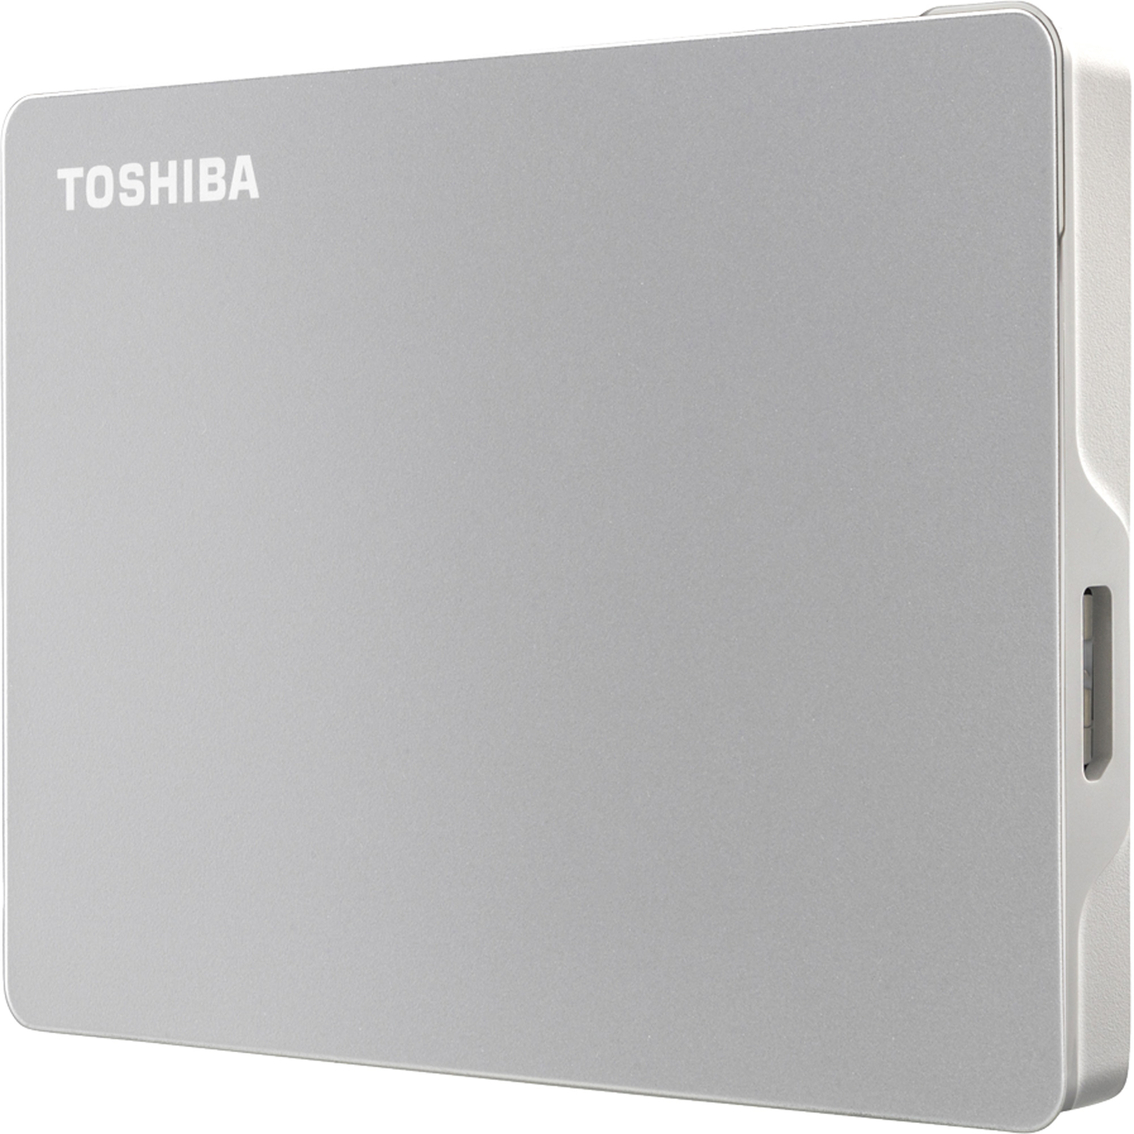 Toshiba Canvio Flex Portable External 1TB Hard Drive - Image 2 of 4